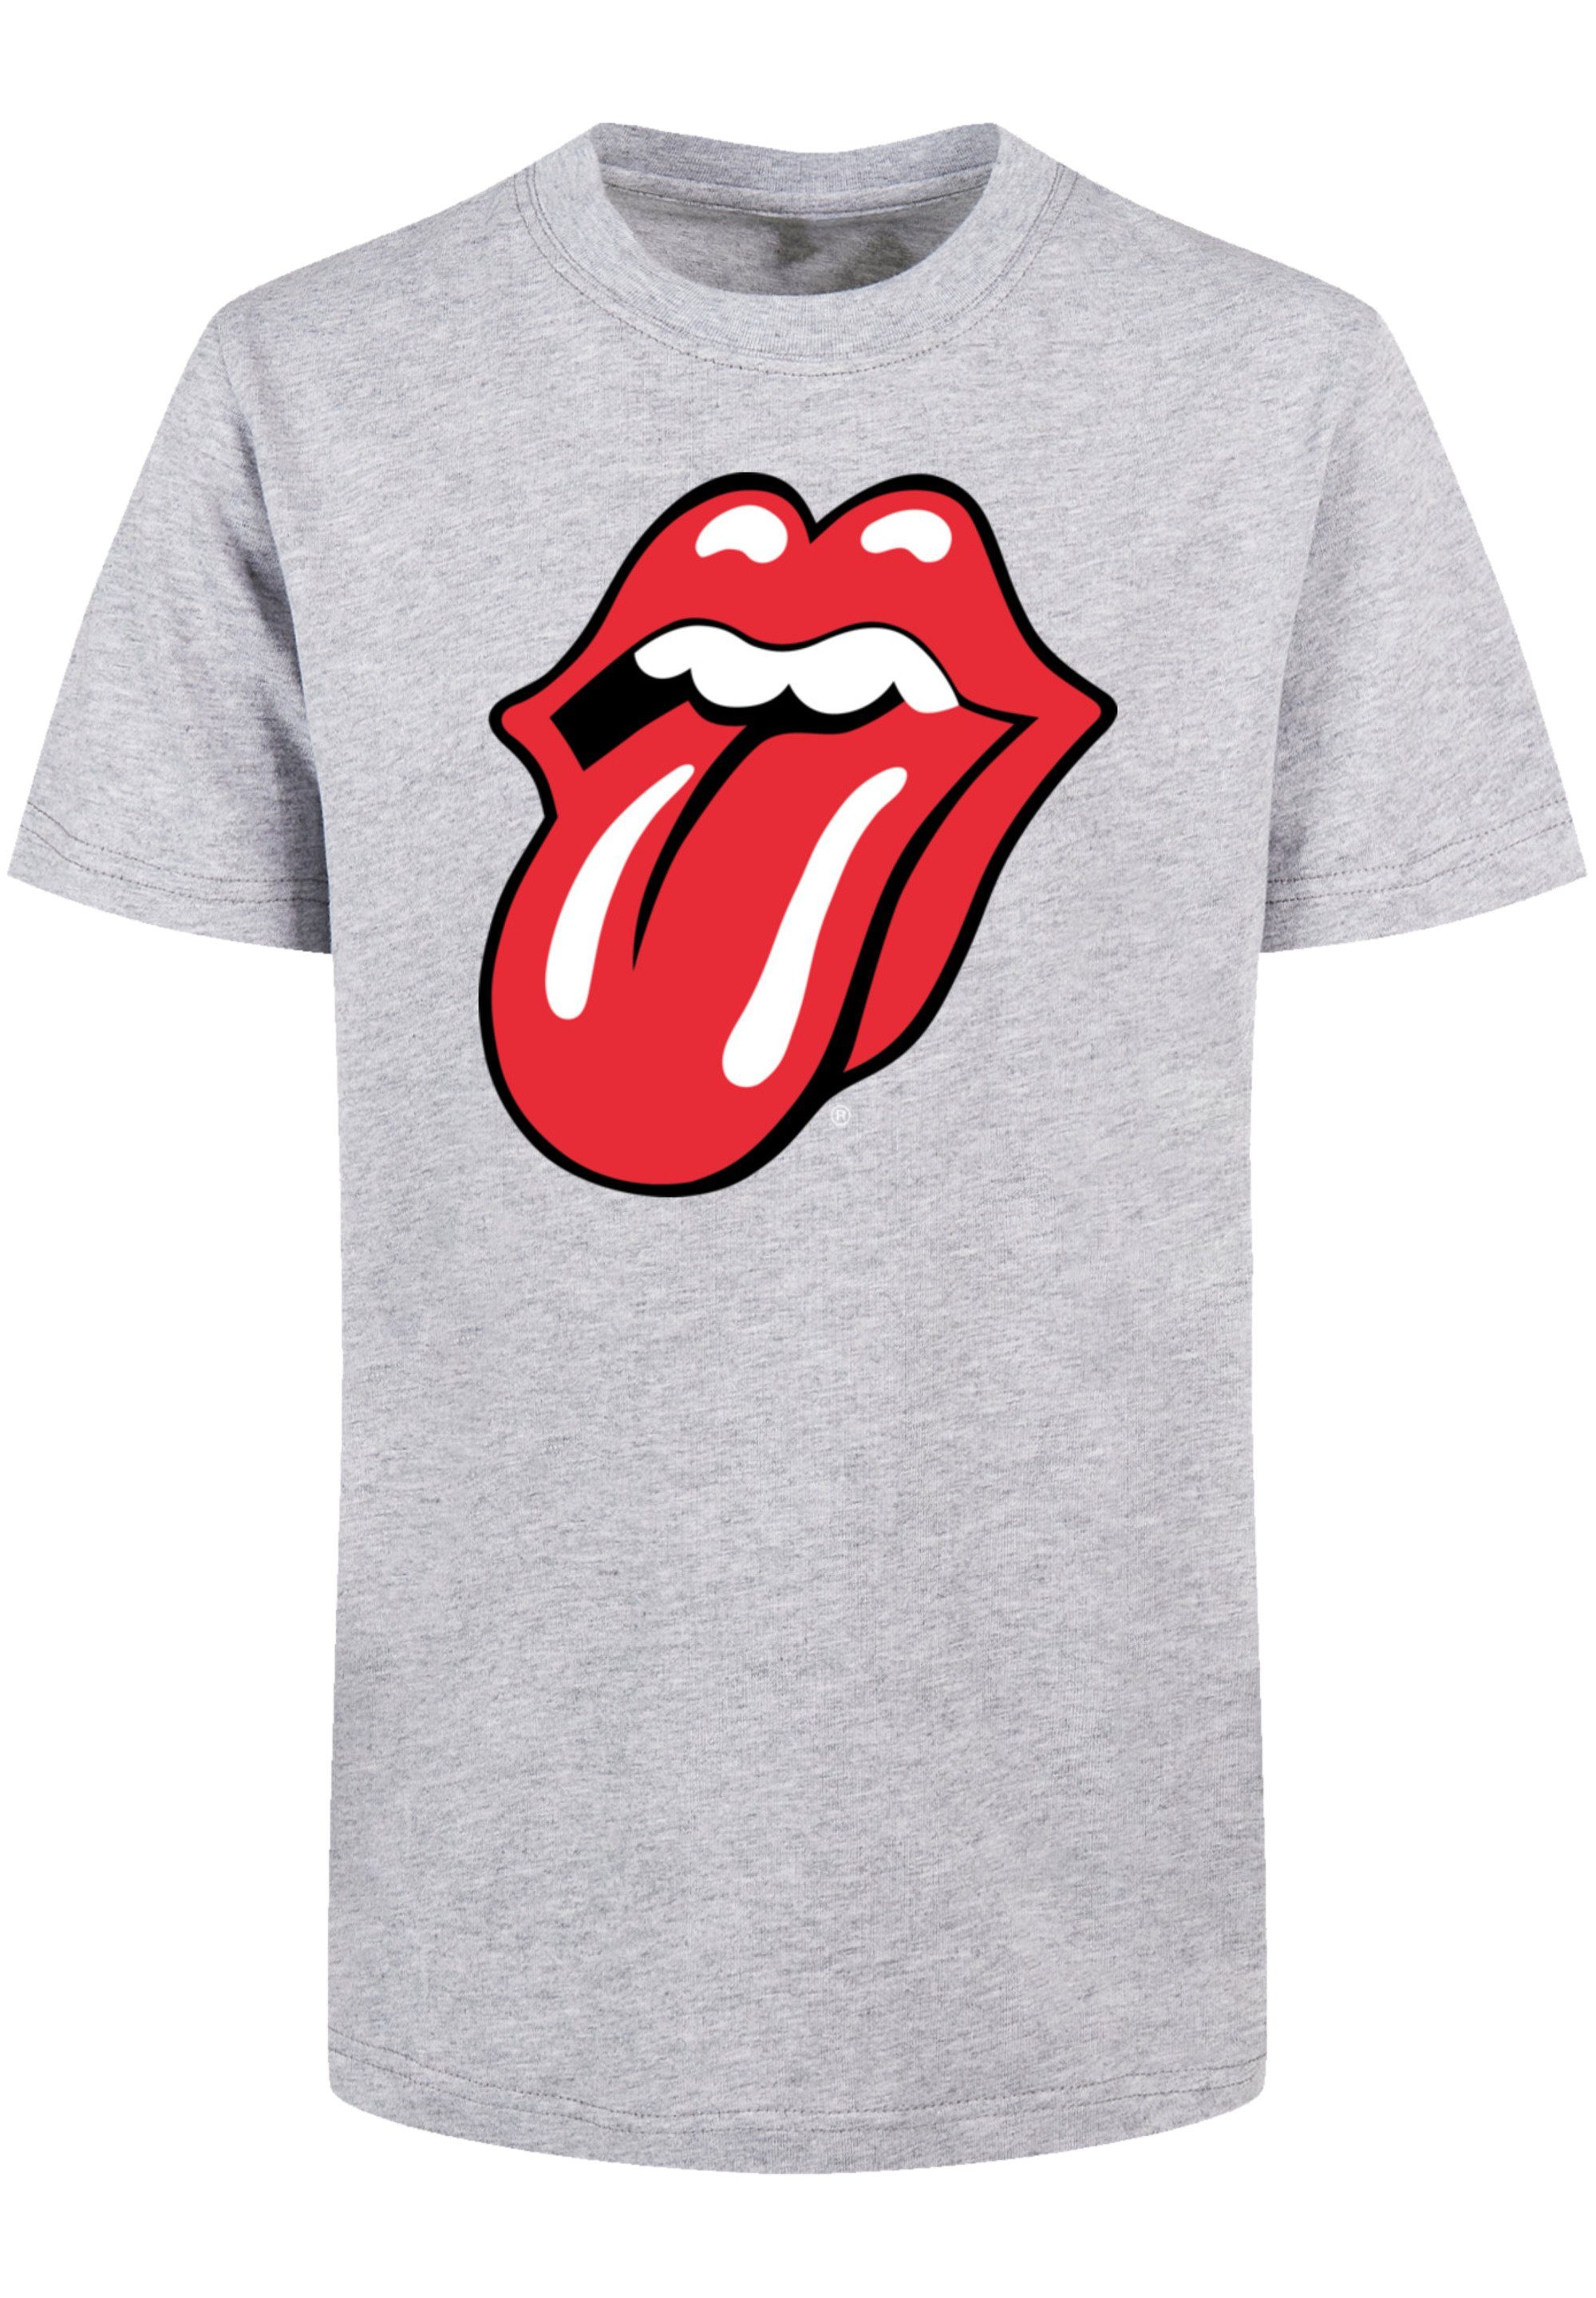 Stones Tongue The T-Shirt Classic F4NT4STIC heathergrey Rolling Print